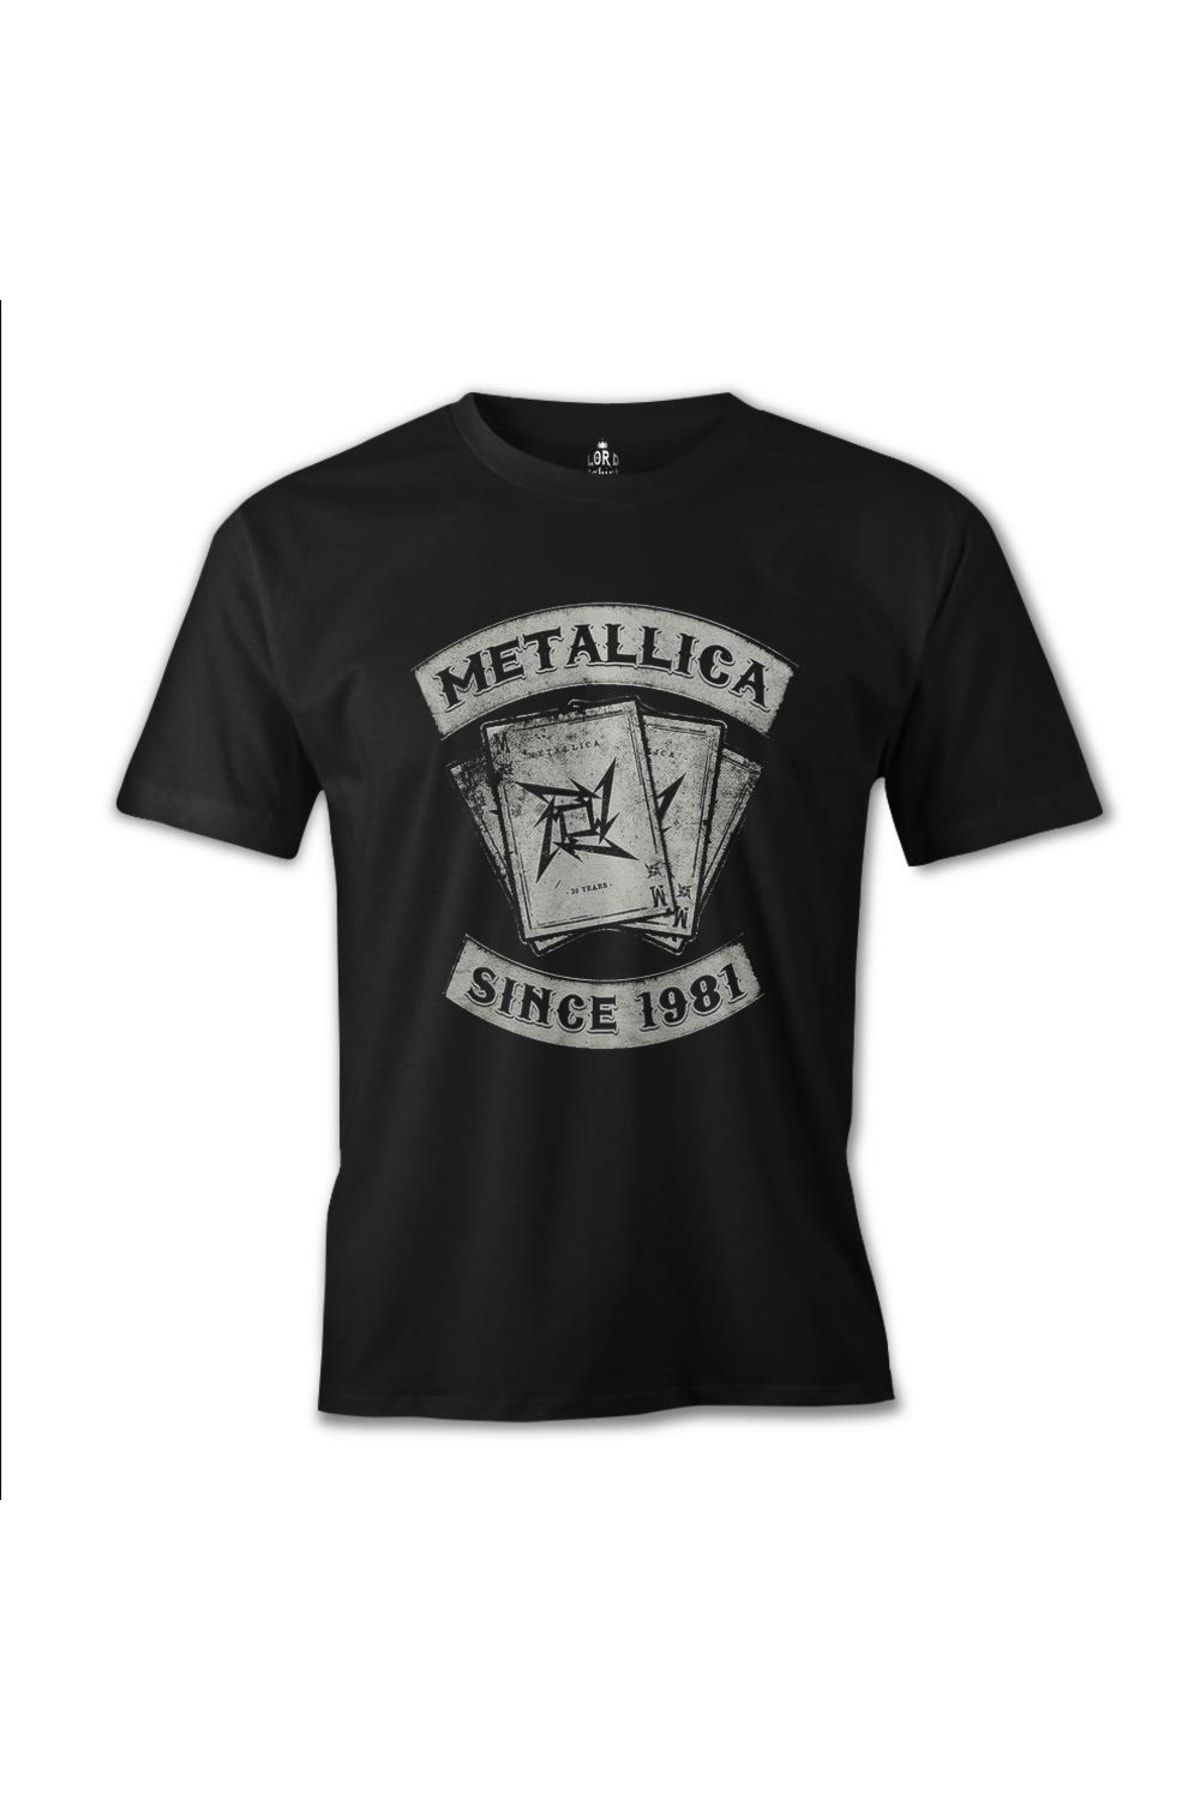 Lord T-Shirt Erkek Siyah Metallica Since 1981 Tshirt